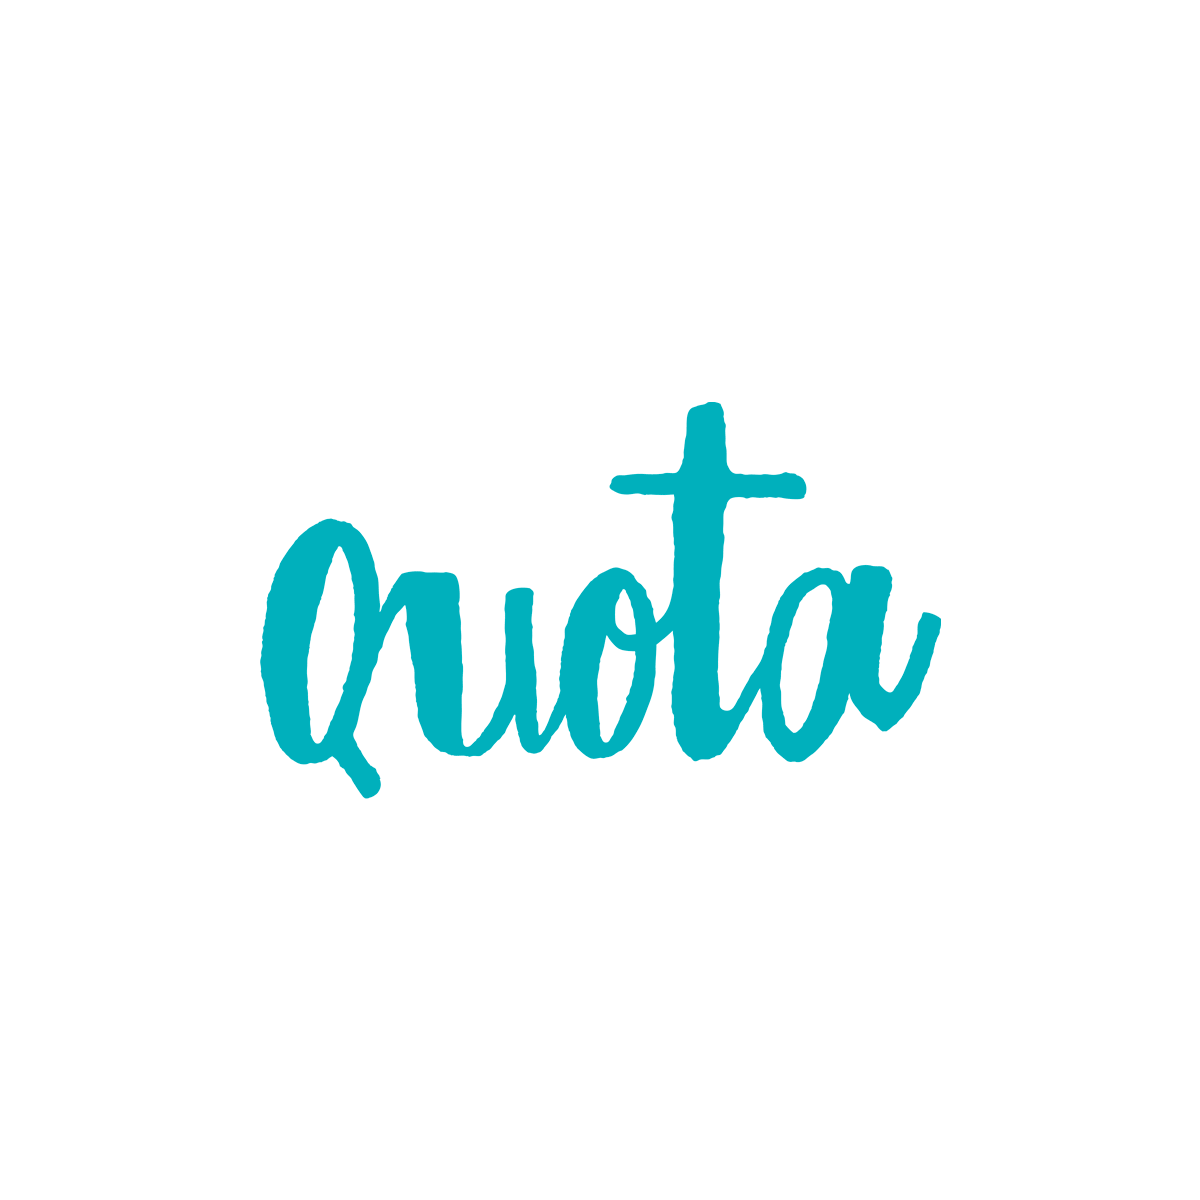 Quota Logo - Quota